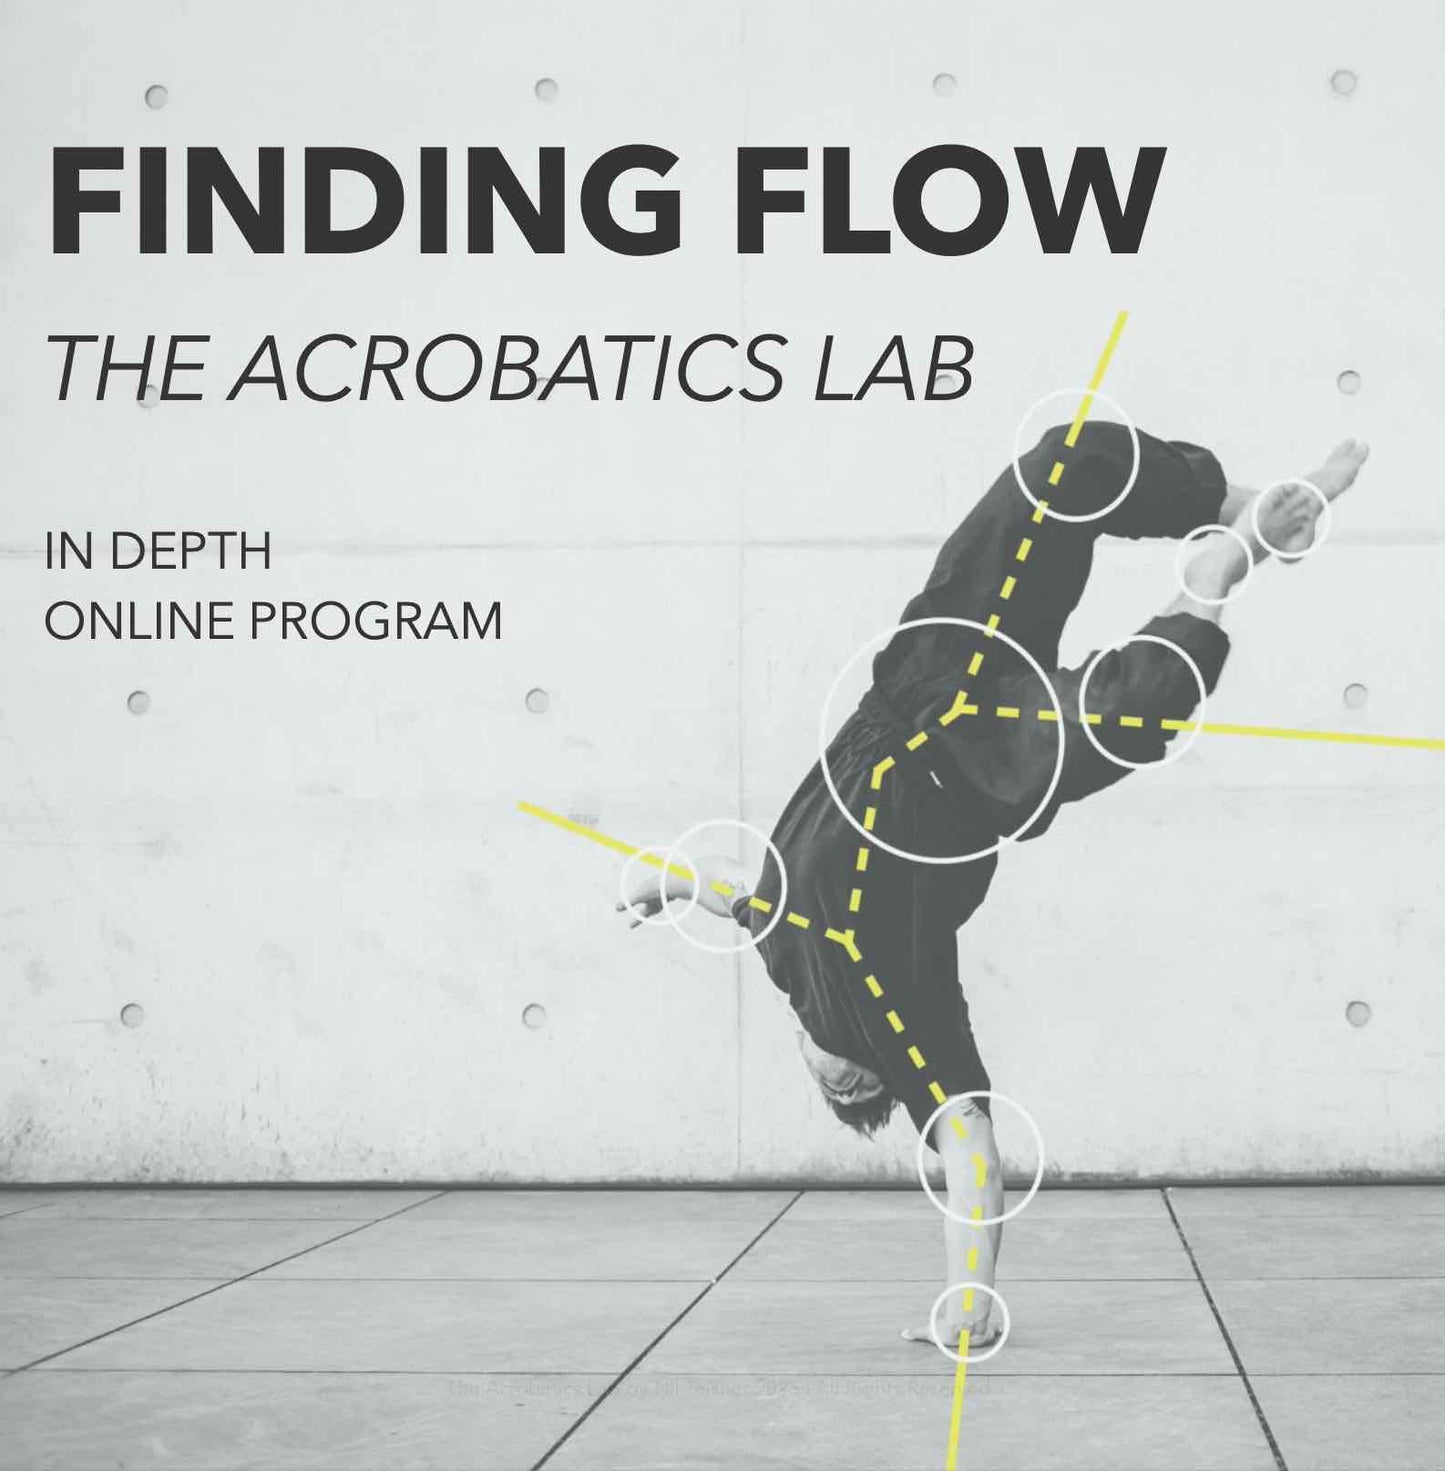 Finding Flow "The Acrobatics Lab" Program